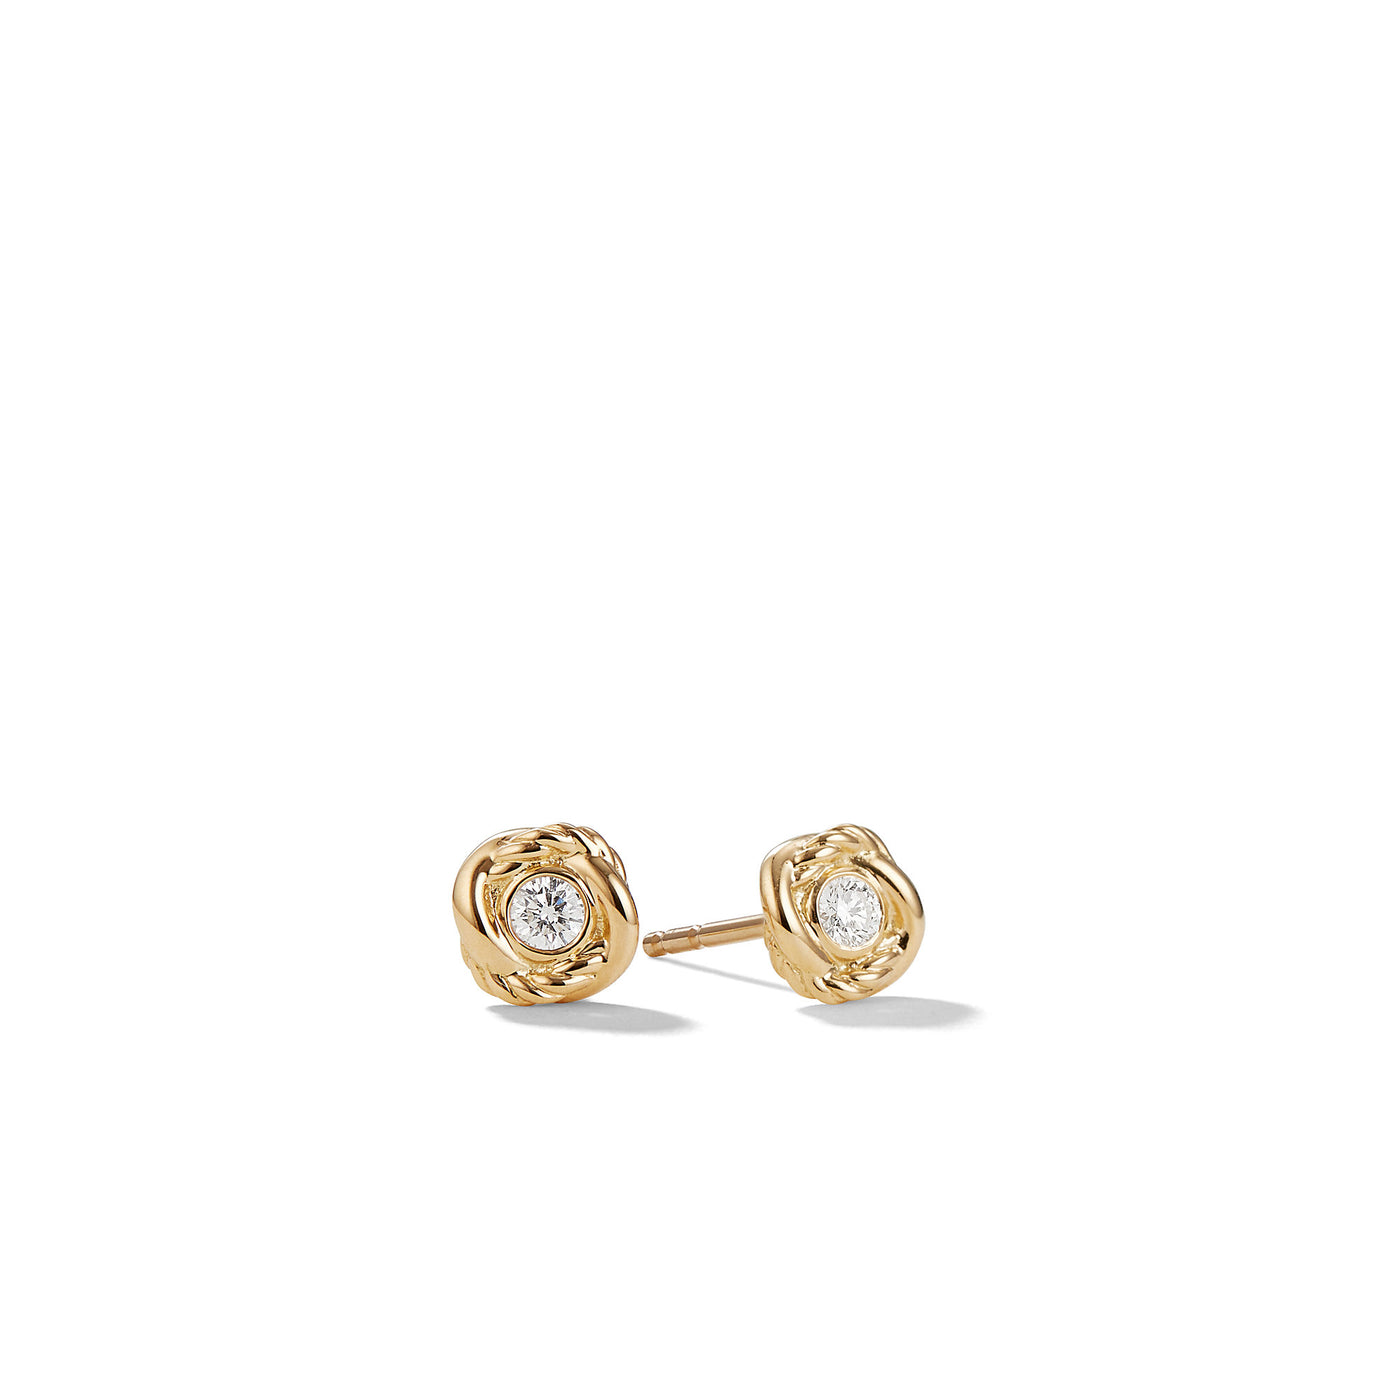 Infinity Stud Earrings in 18K Yellow Gold with Diamonds\, 6.8mm